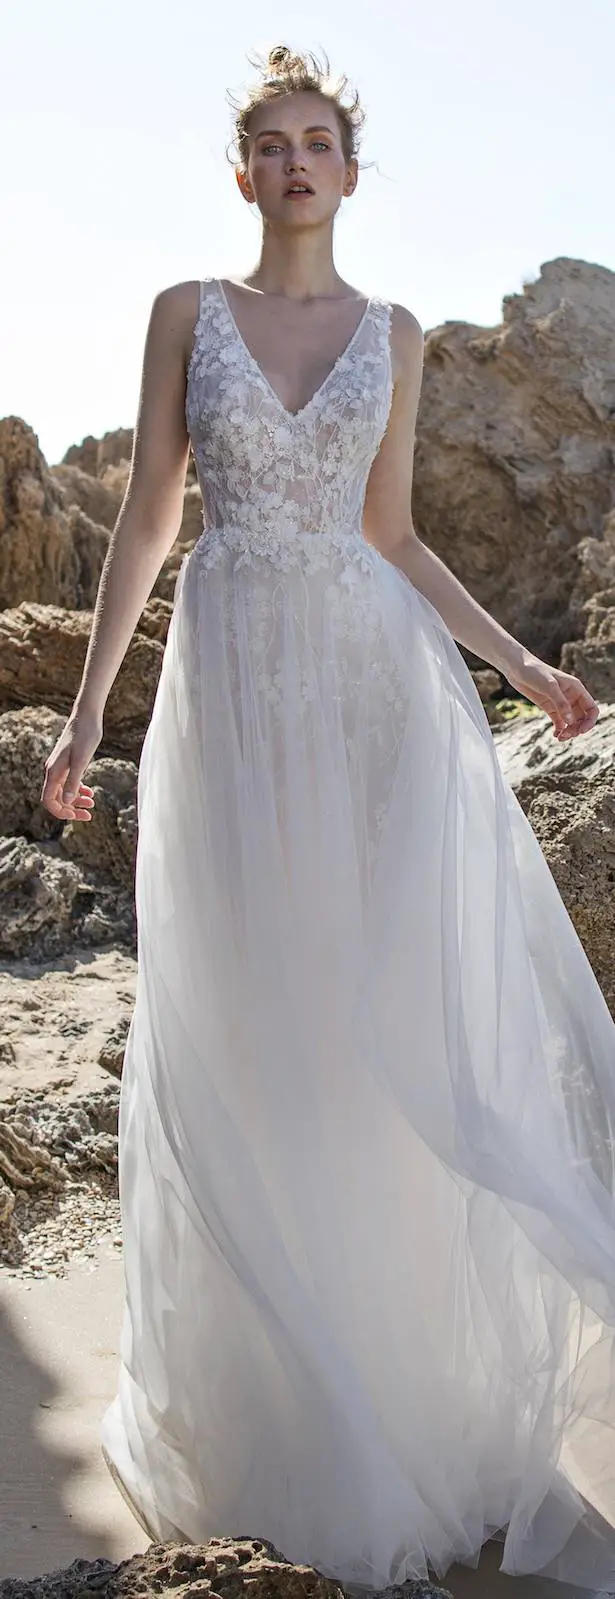 Wedding Dress by Limor Rosen Bridal Couture 2018 Free Spirit Collection - Emilia